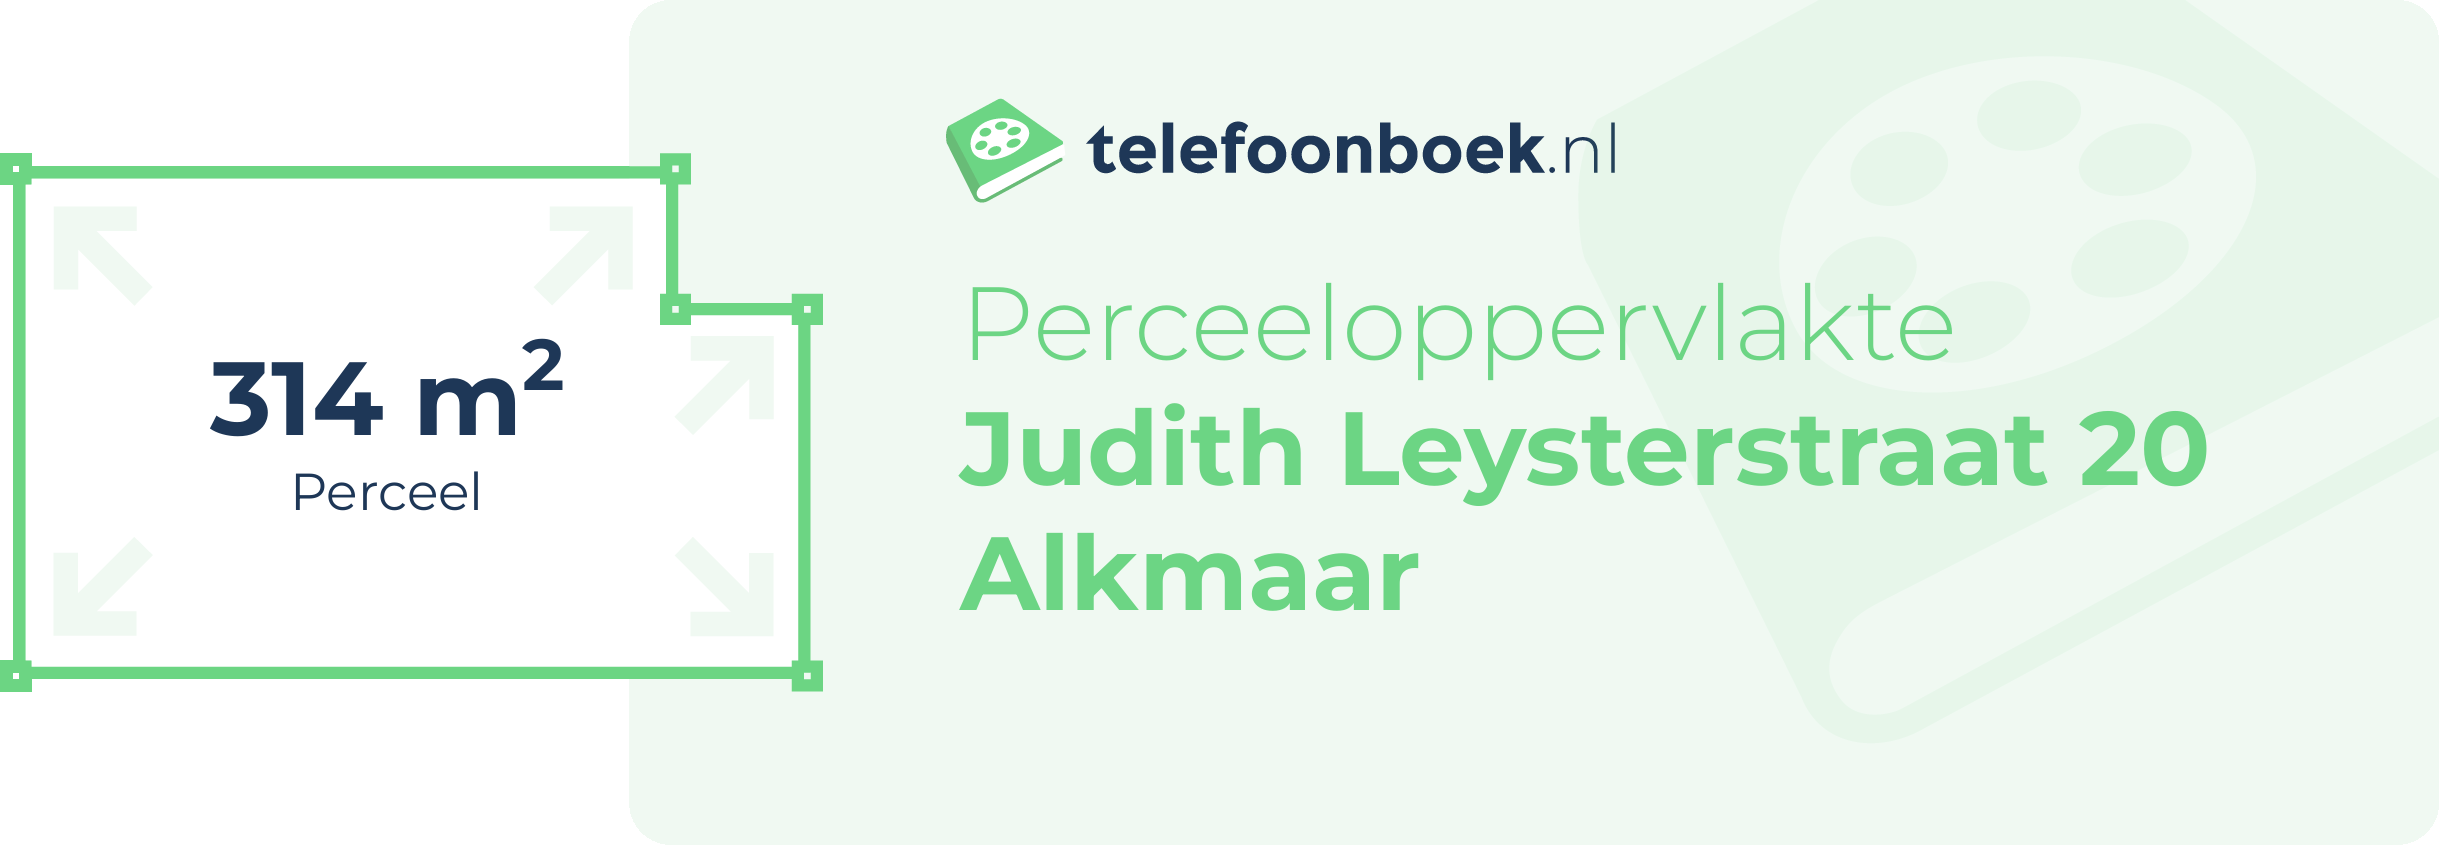 Perceeloppervlakte Judith Leysterstraat 20 Alkmaar